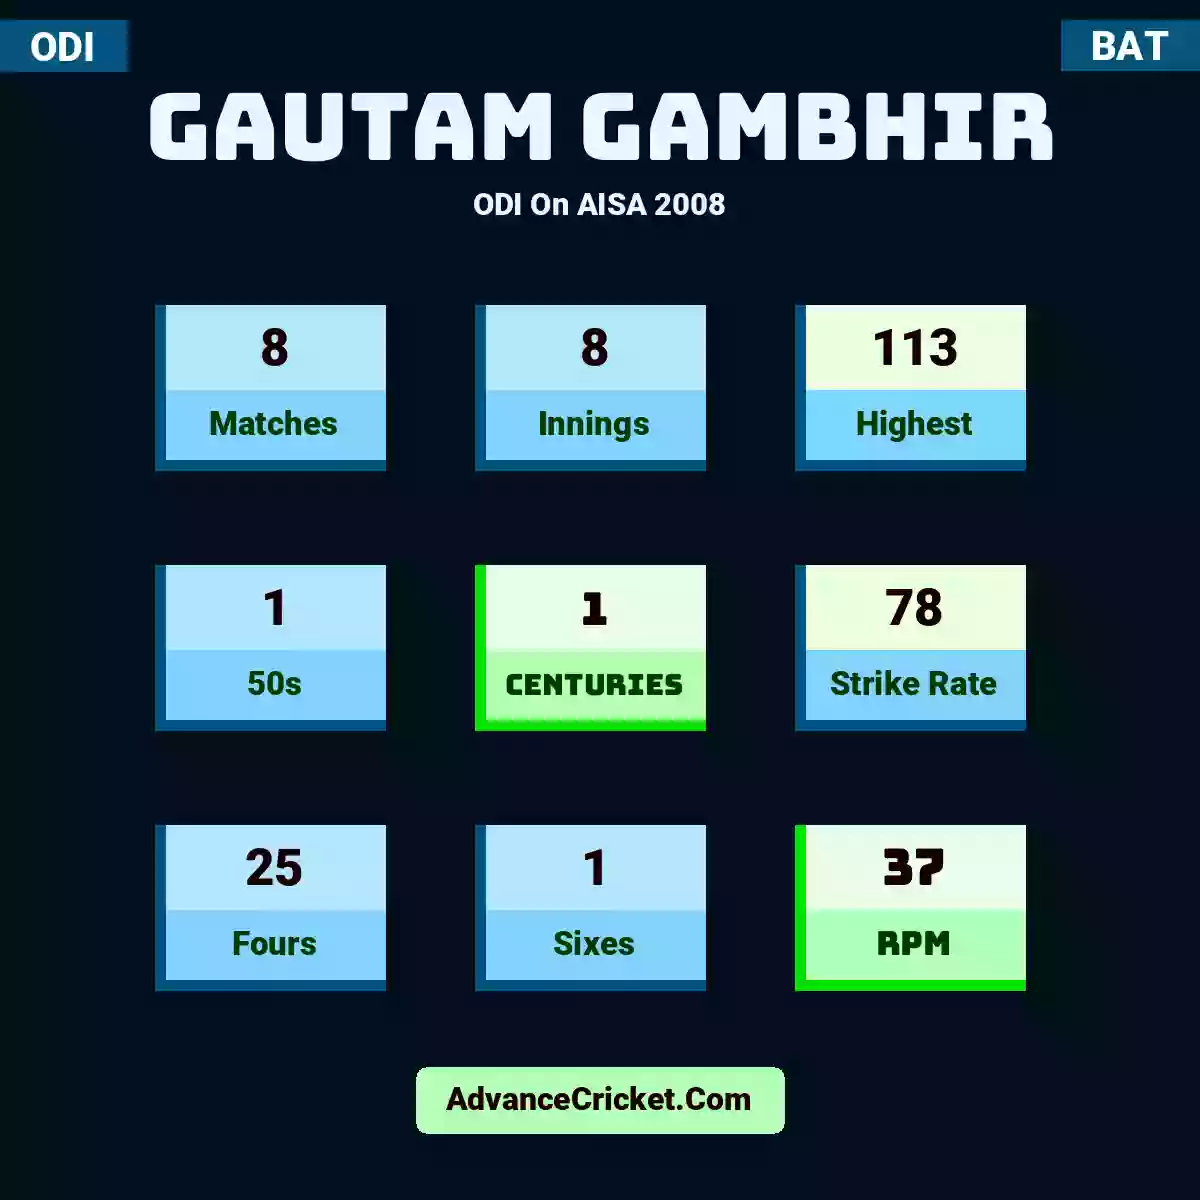 Gautam Gambhir ODI  On AISA 2008, Gautam Gambhir played 8 matches, scored 113 runs as highest, 1 half-centuries, and 1 centuries, with a strike rate of 78. G.Gambhir hit 25 fours and 1 sixes, with an RPM of 37.